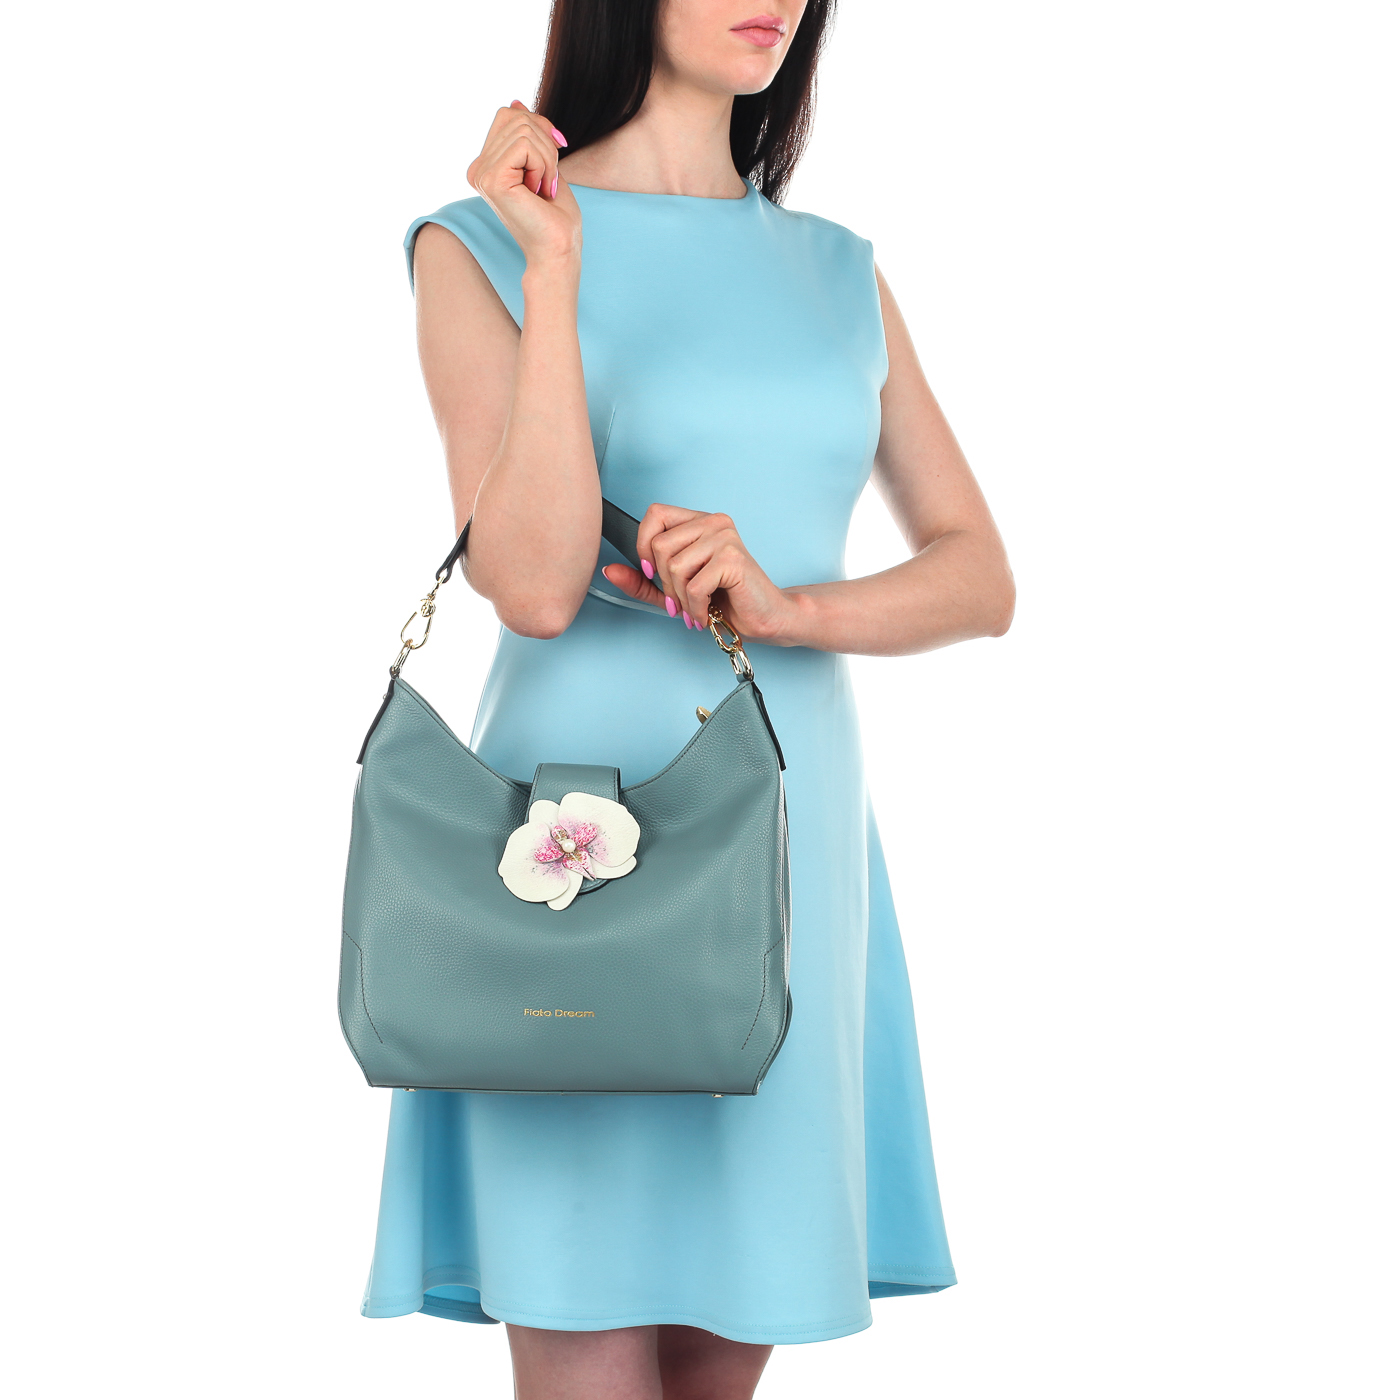 Женская сумка-хобо из кожи Fiato Dream 